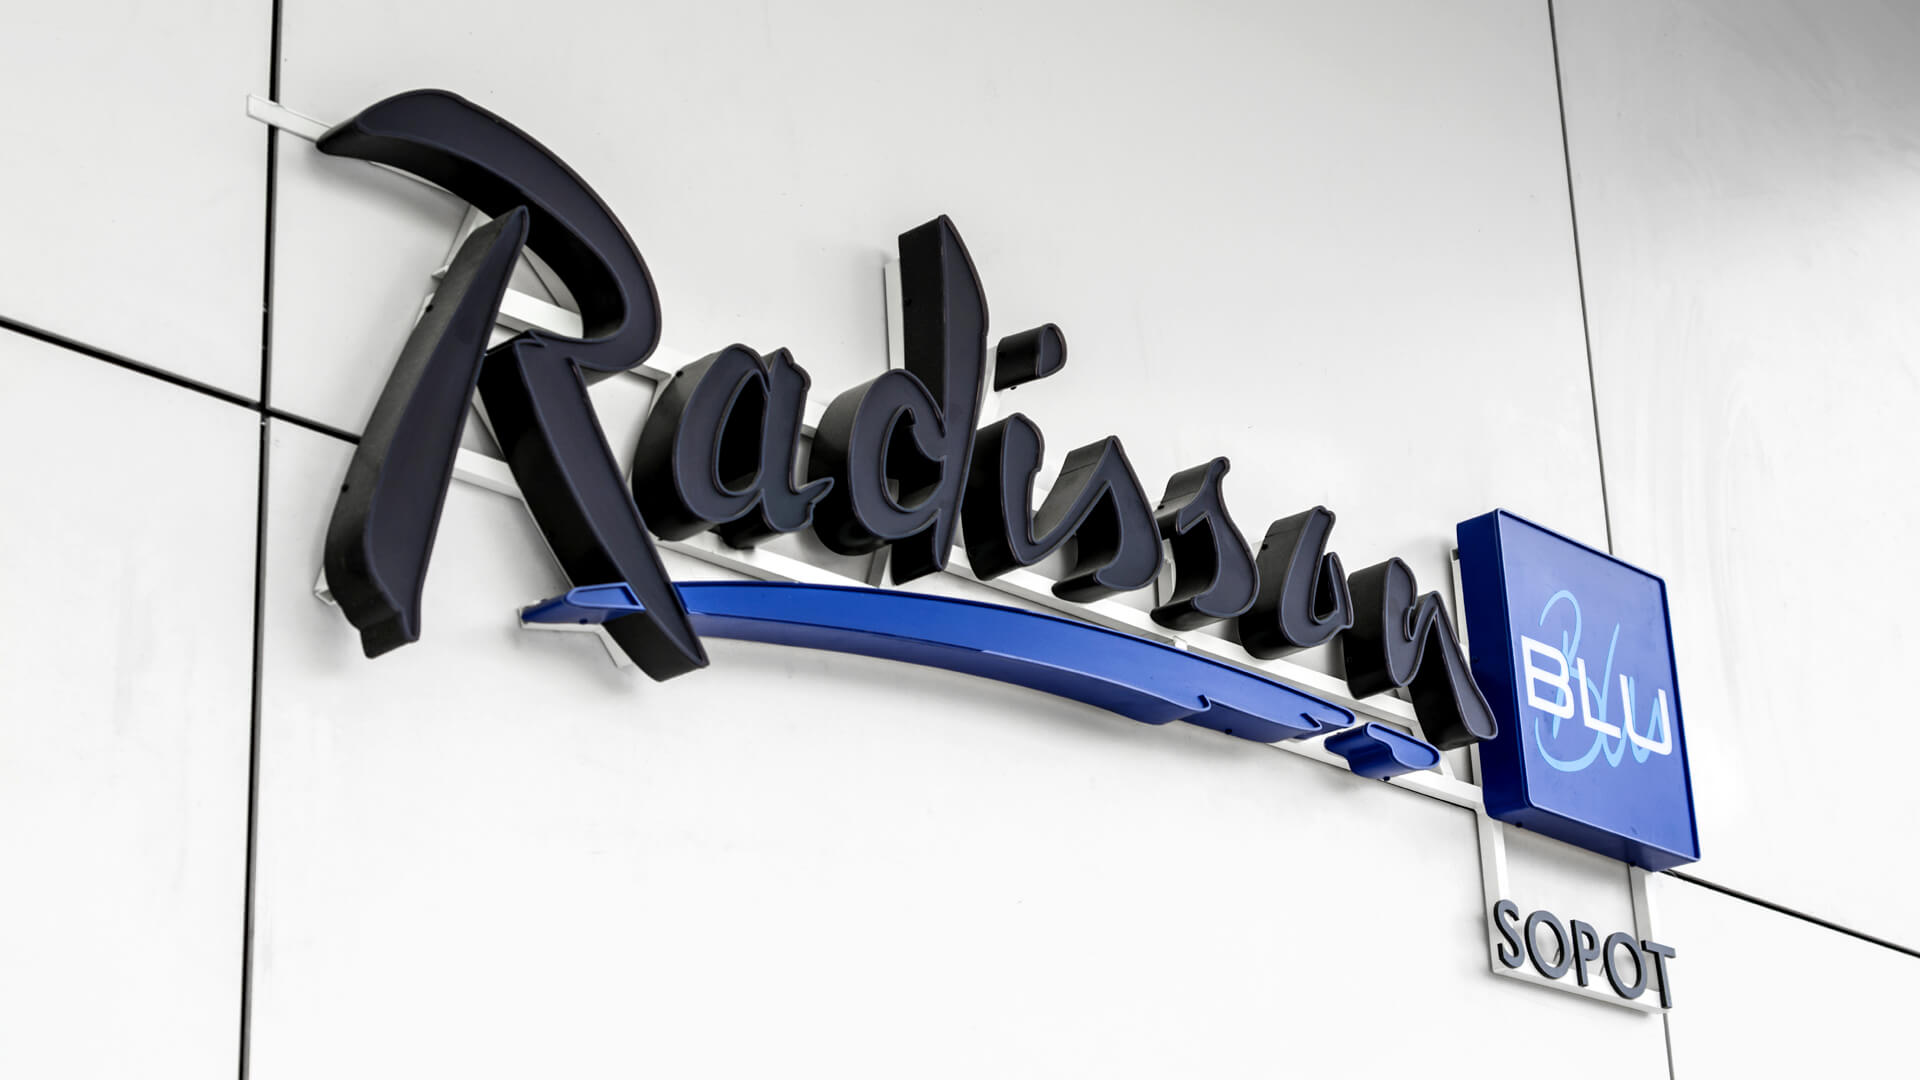 radisson blu - lettere illuminate-3d-led-black-&-white-radisson-blu